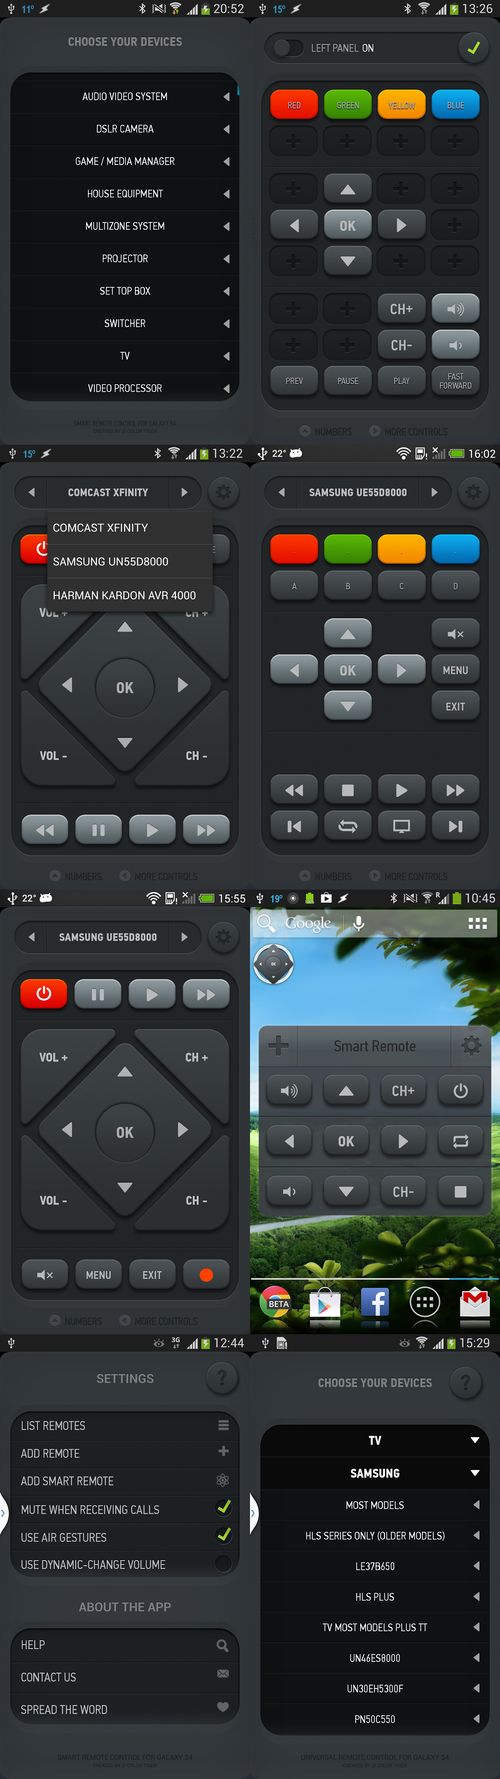 Smart IR Remote – Samsung/HTC 1.6.6